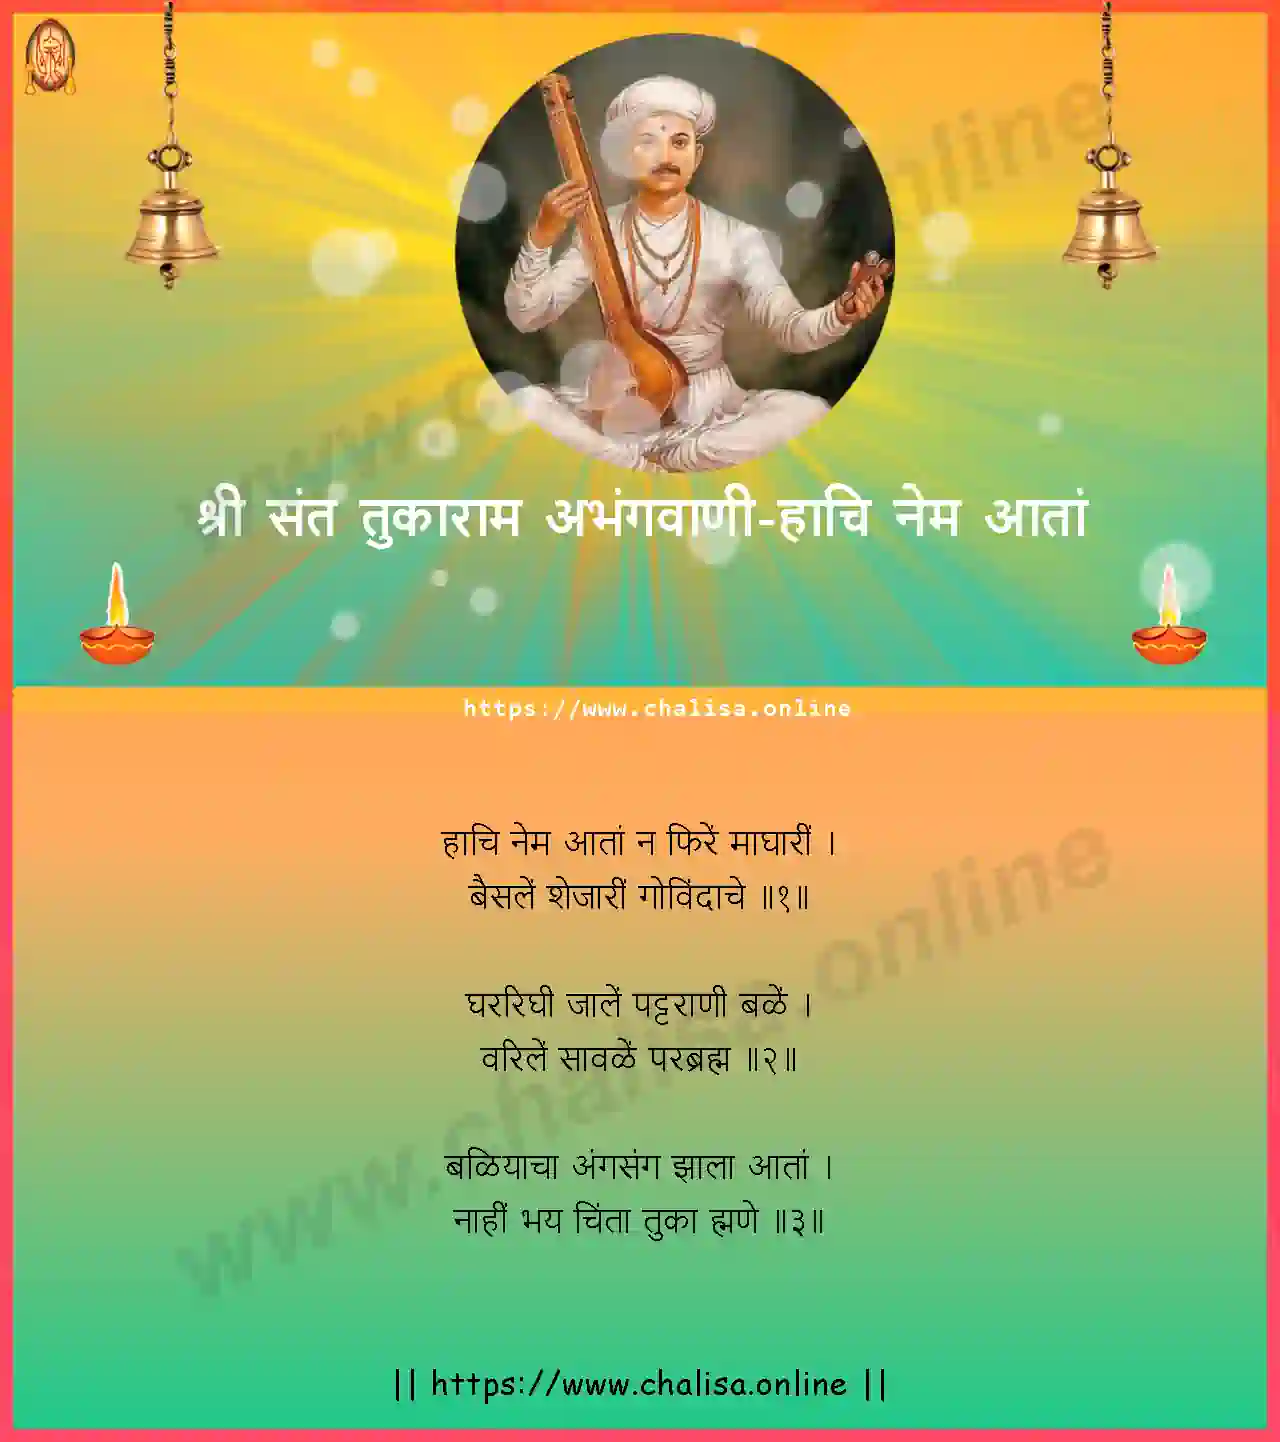 hachi-nem-aata-shri-sant-tukaram-abhang-marathi-lyrics-download